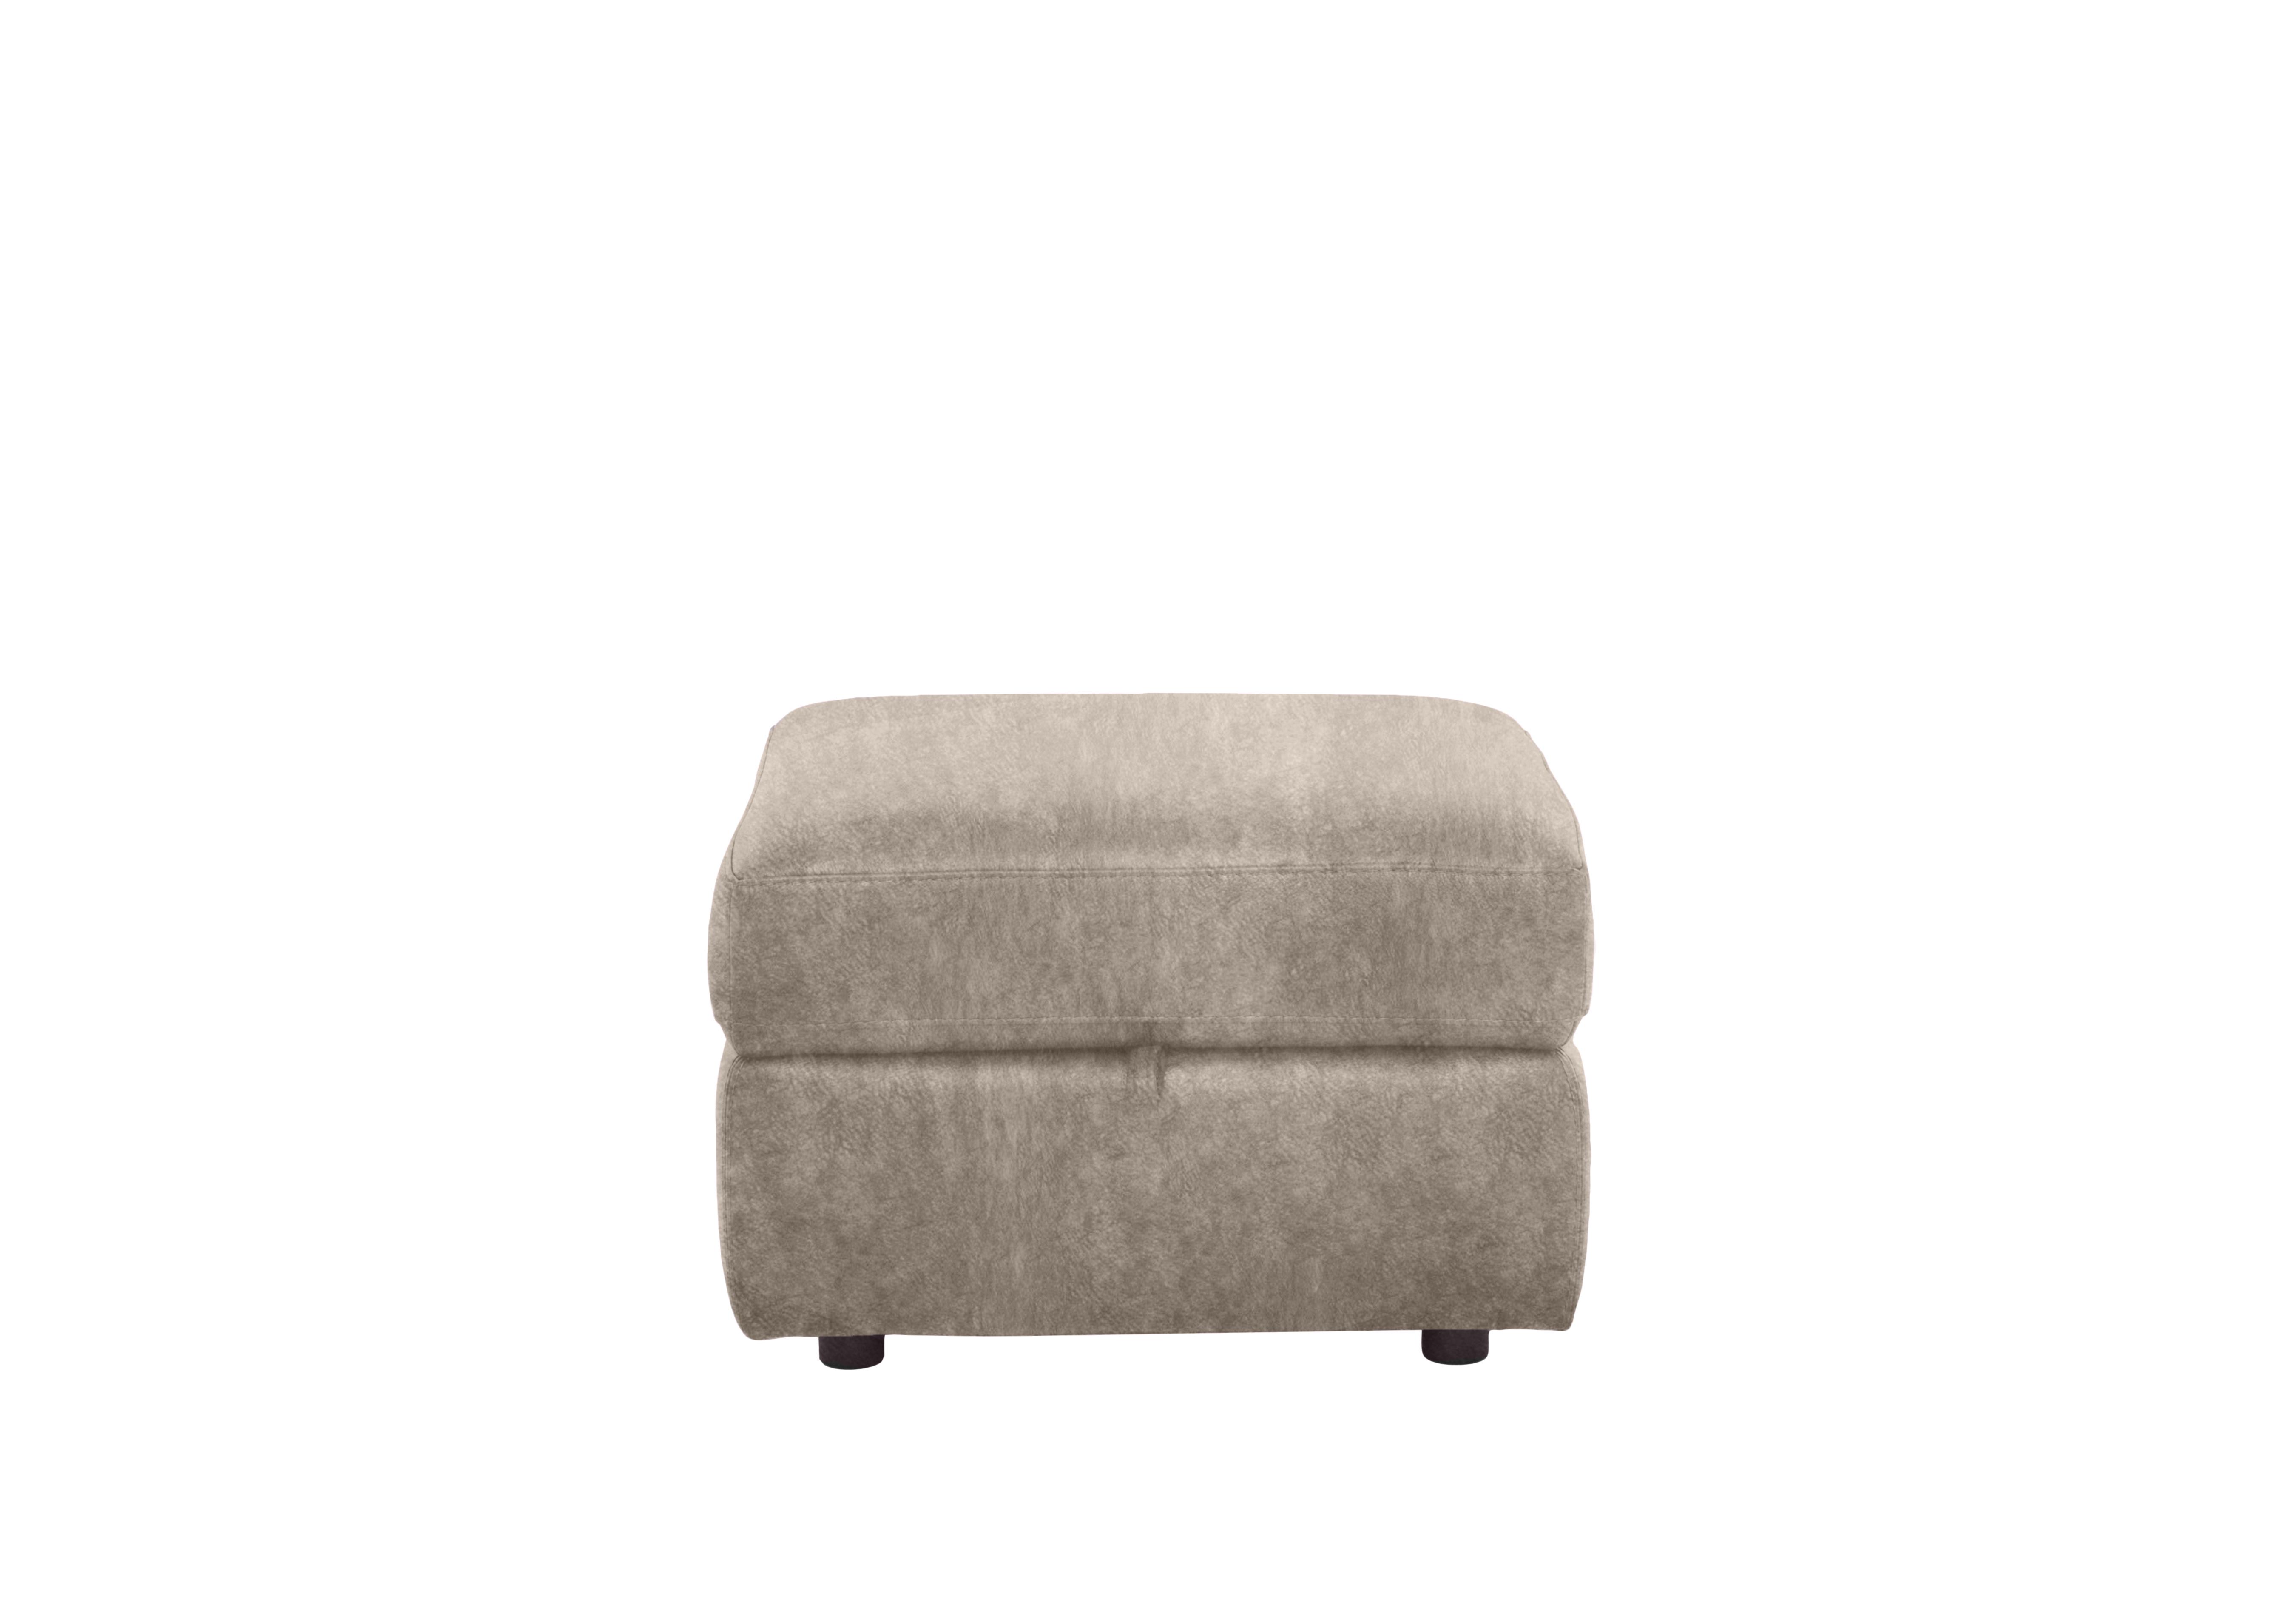 Fabric Storage Footstool in Bfa-Bnn-R29 Mink on Furniture Village